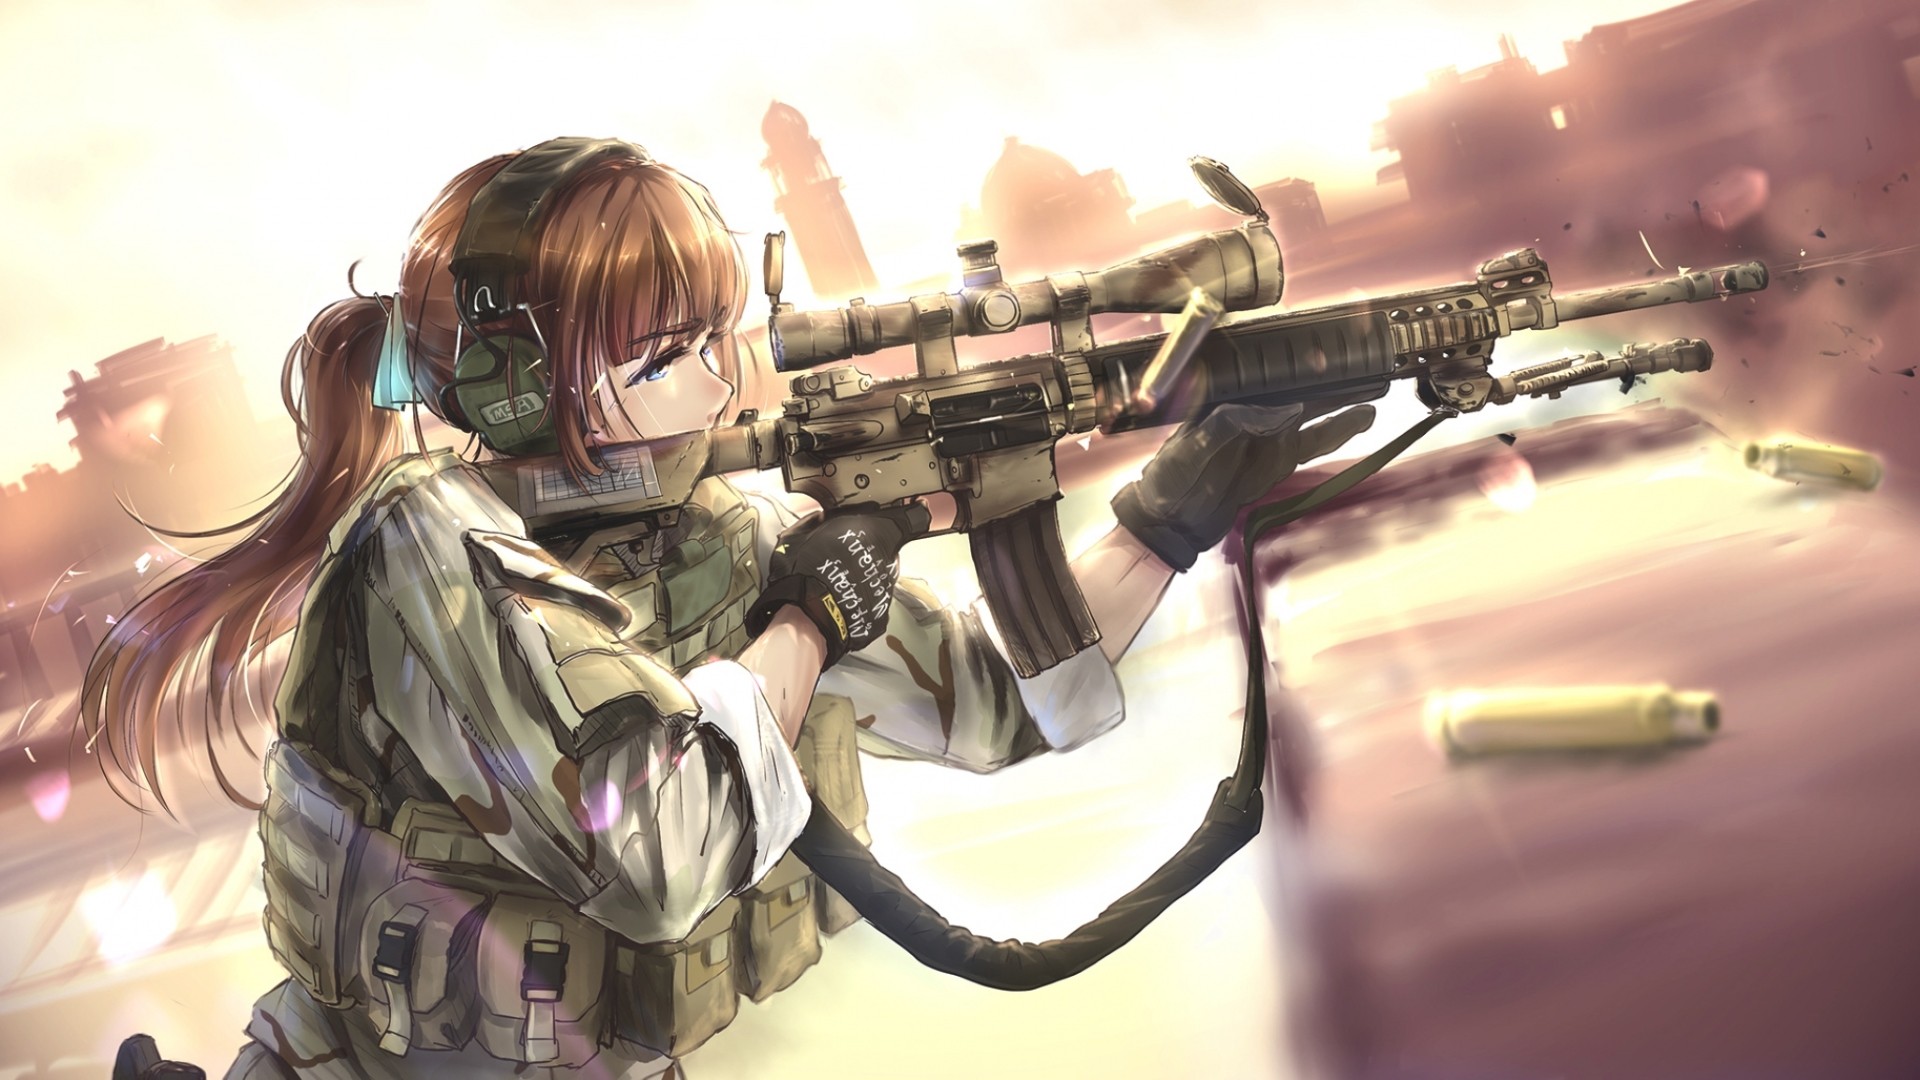 Anime Anime Girls Military Weapon TC1995 Girls With Guns 1920x1080